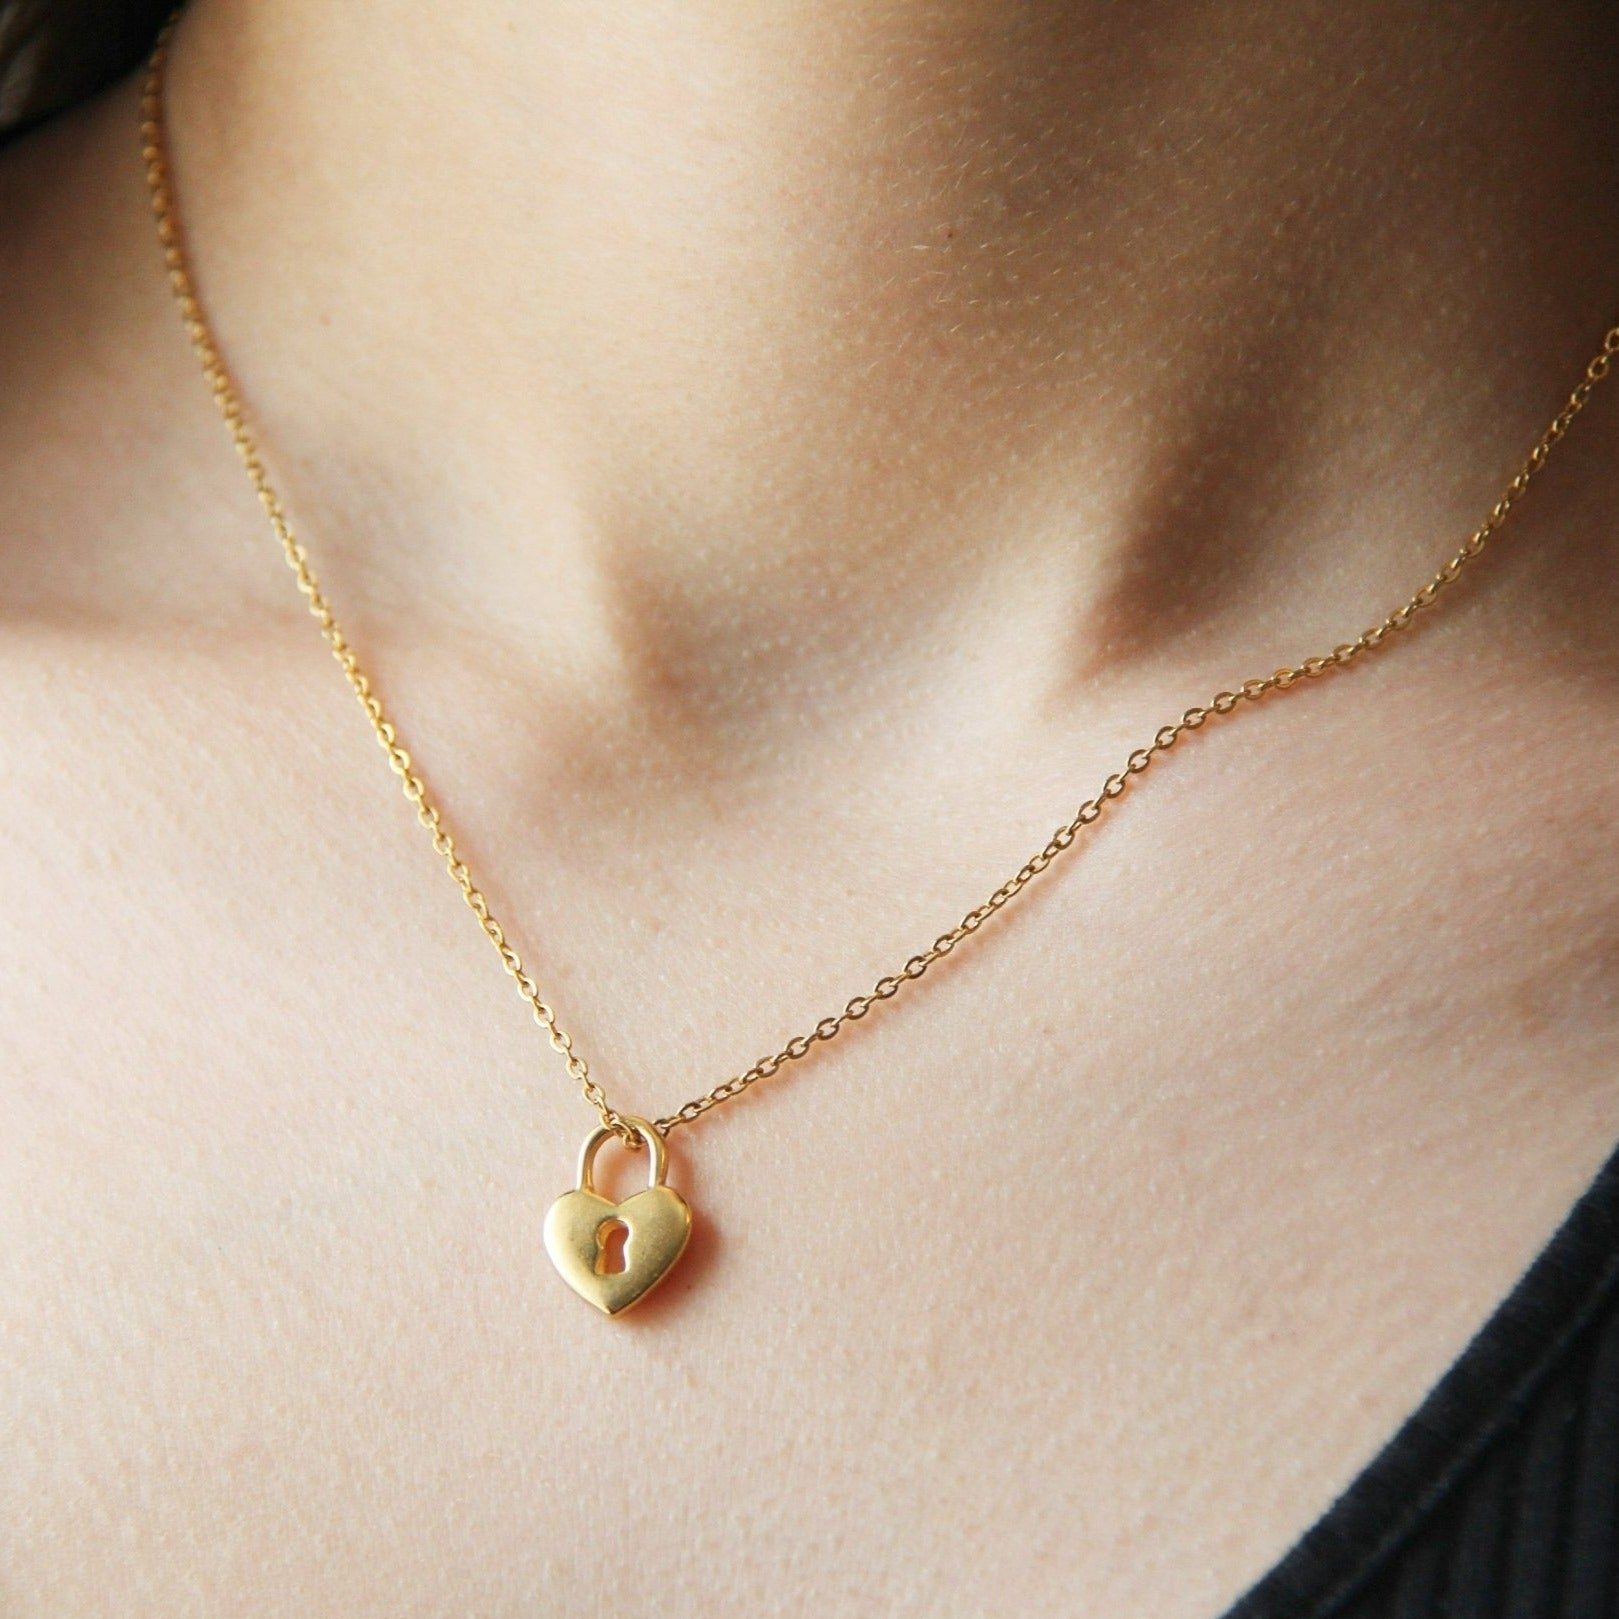 Lock necklace, gold padlock pendant, dainty gold necklace